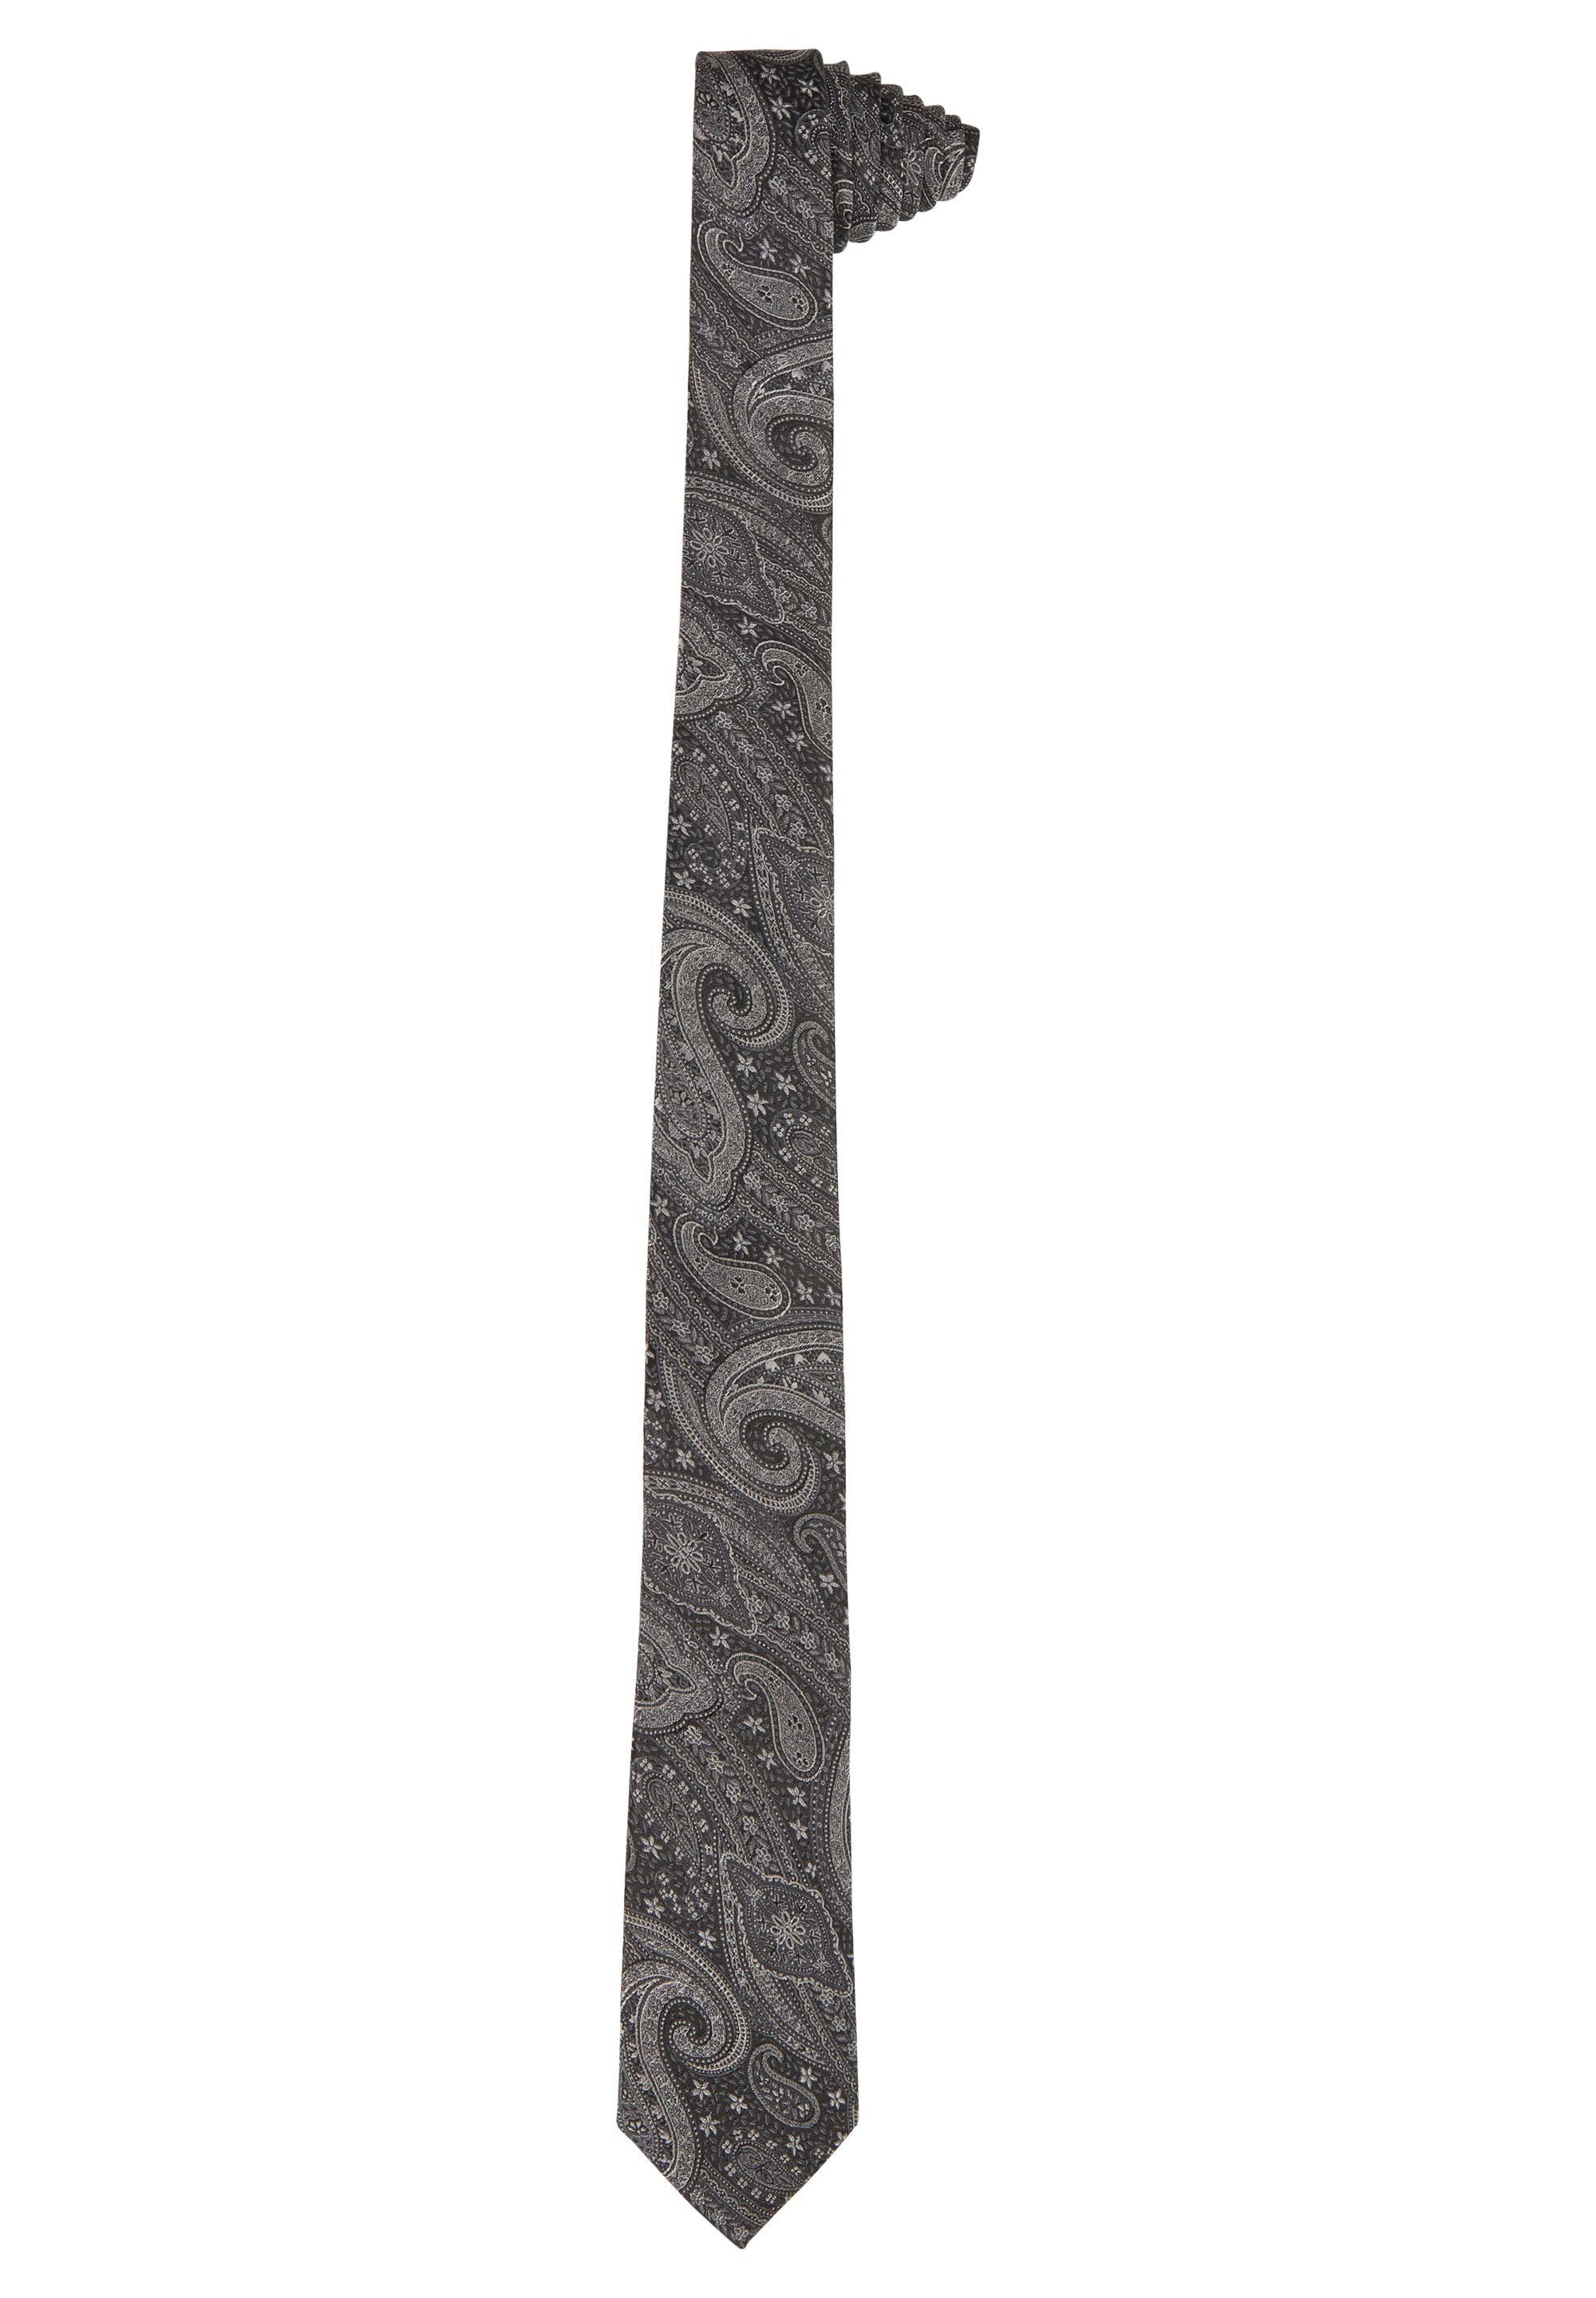 HECHTER PARIS Krawatte mit Paisley-Muster graphite